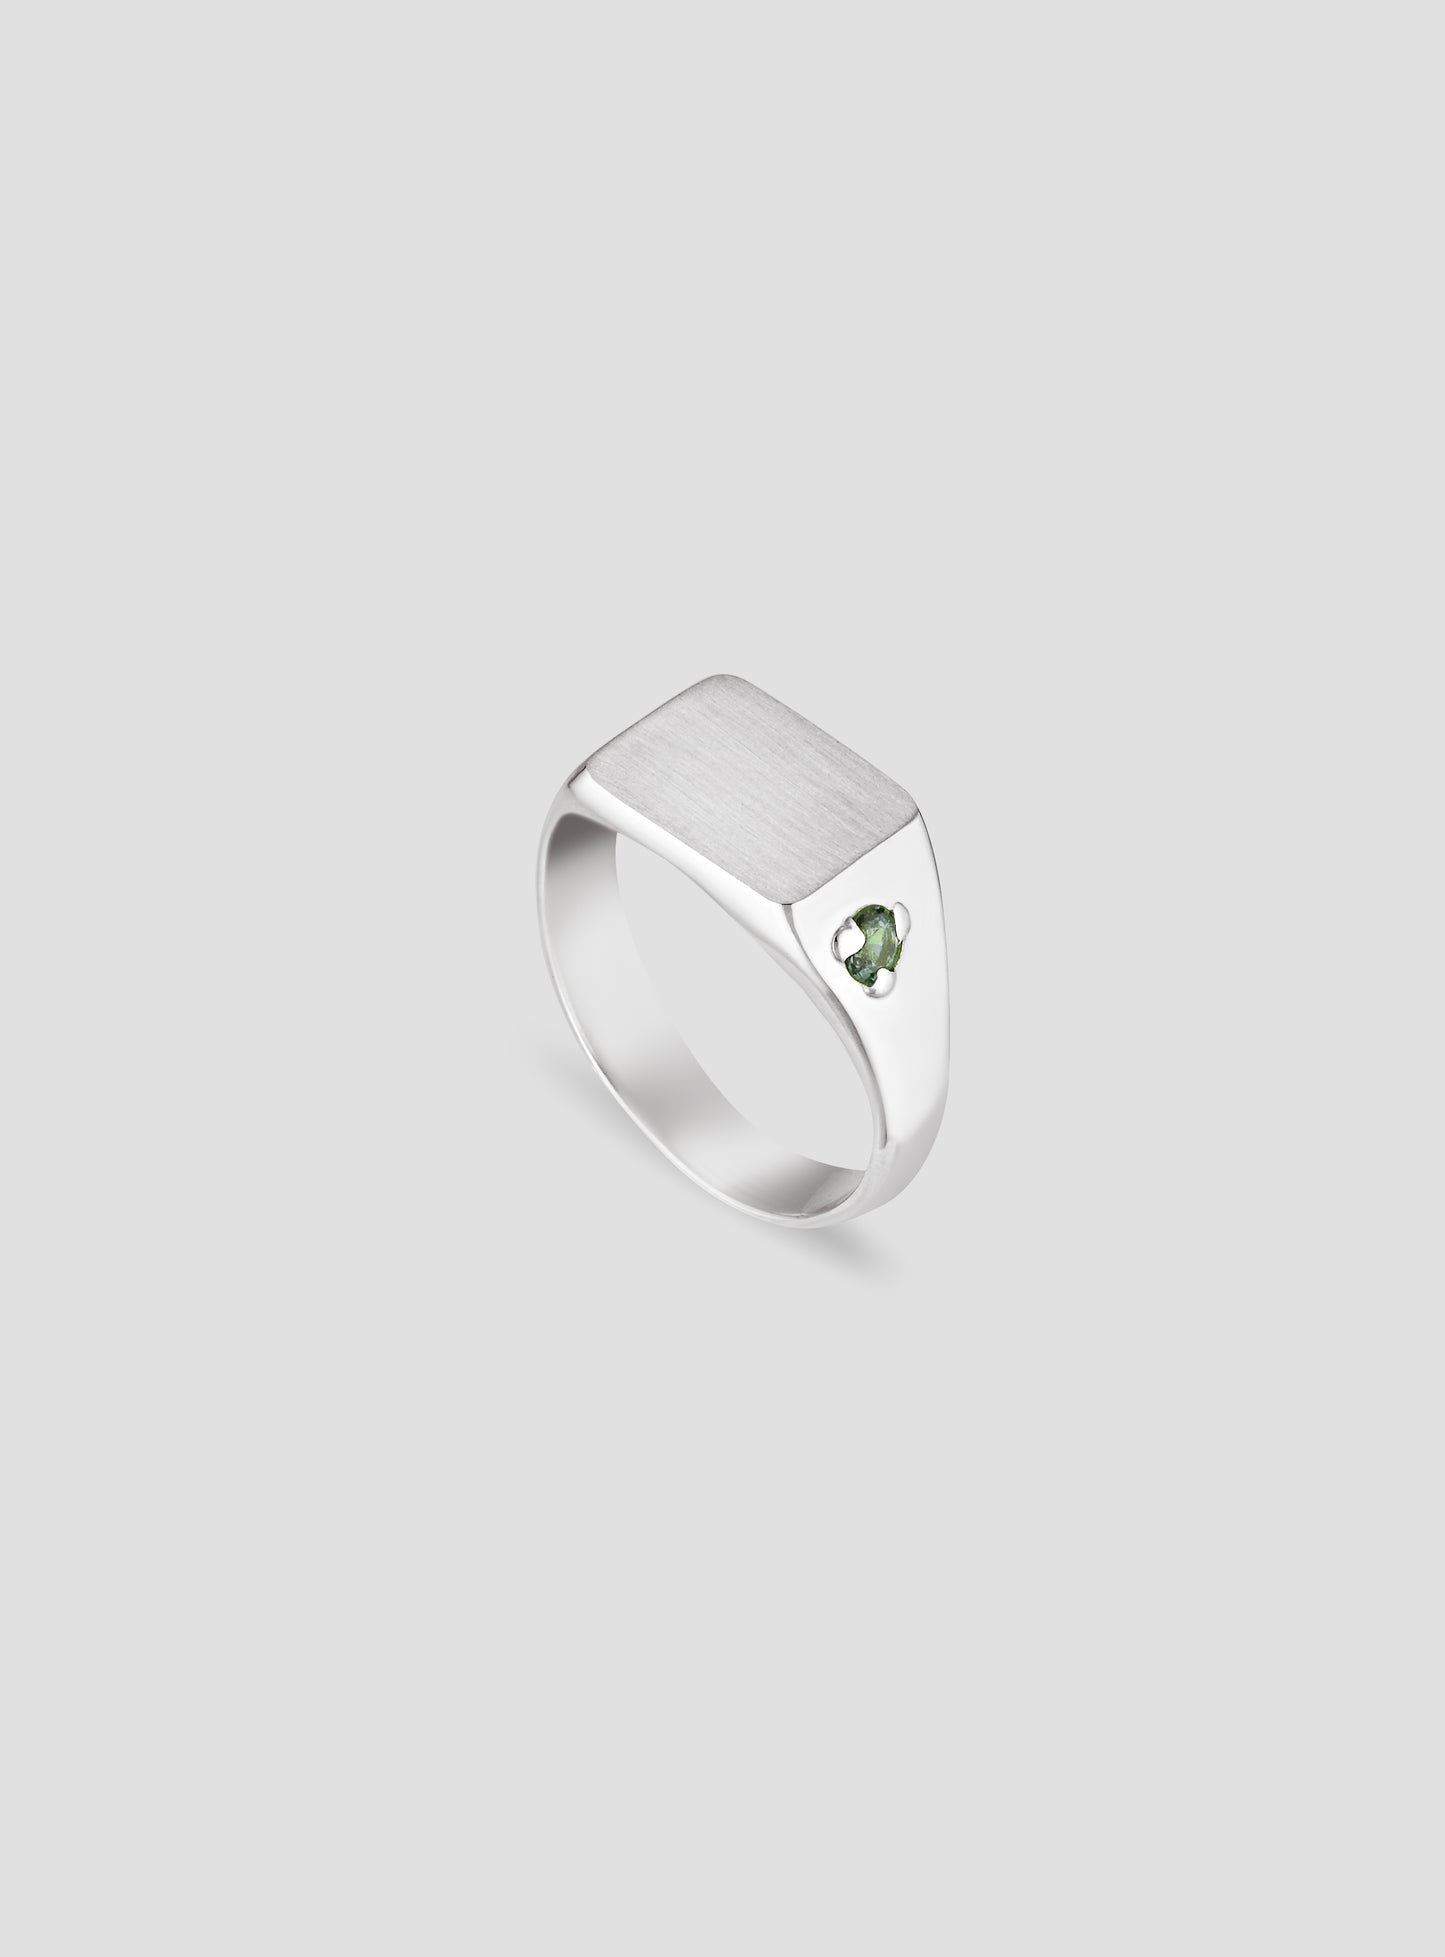 Hermit Ring - Green Tourmaline - Silver